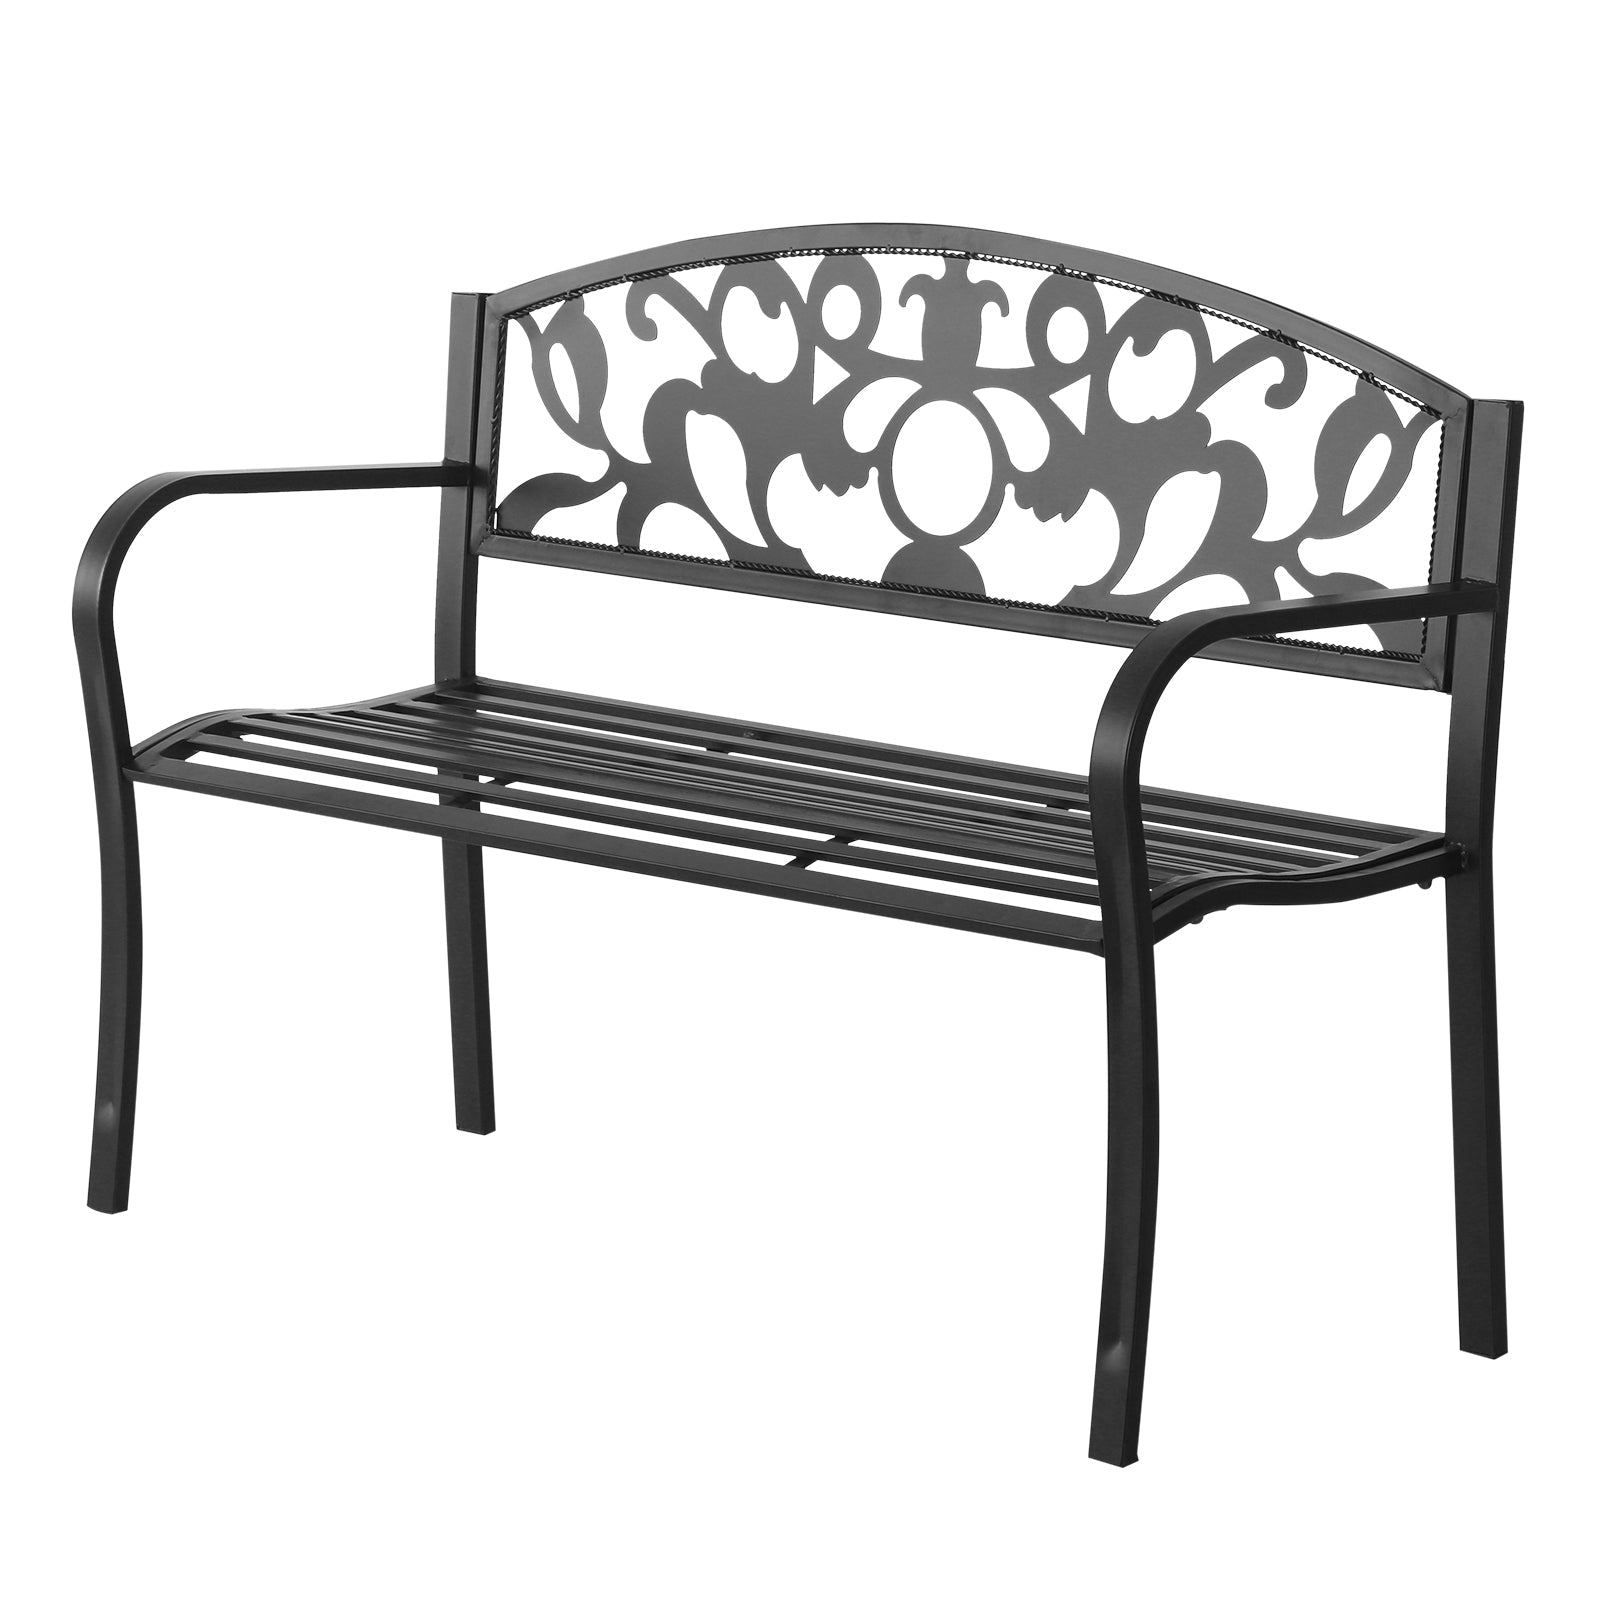 2 Seater Outdoor Patio Garden Metal Bench Park Yard Furniture Porch Chair Seat Black 128L x 91H x 50W cm-0